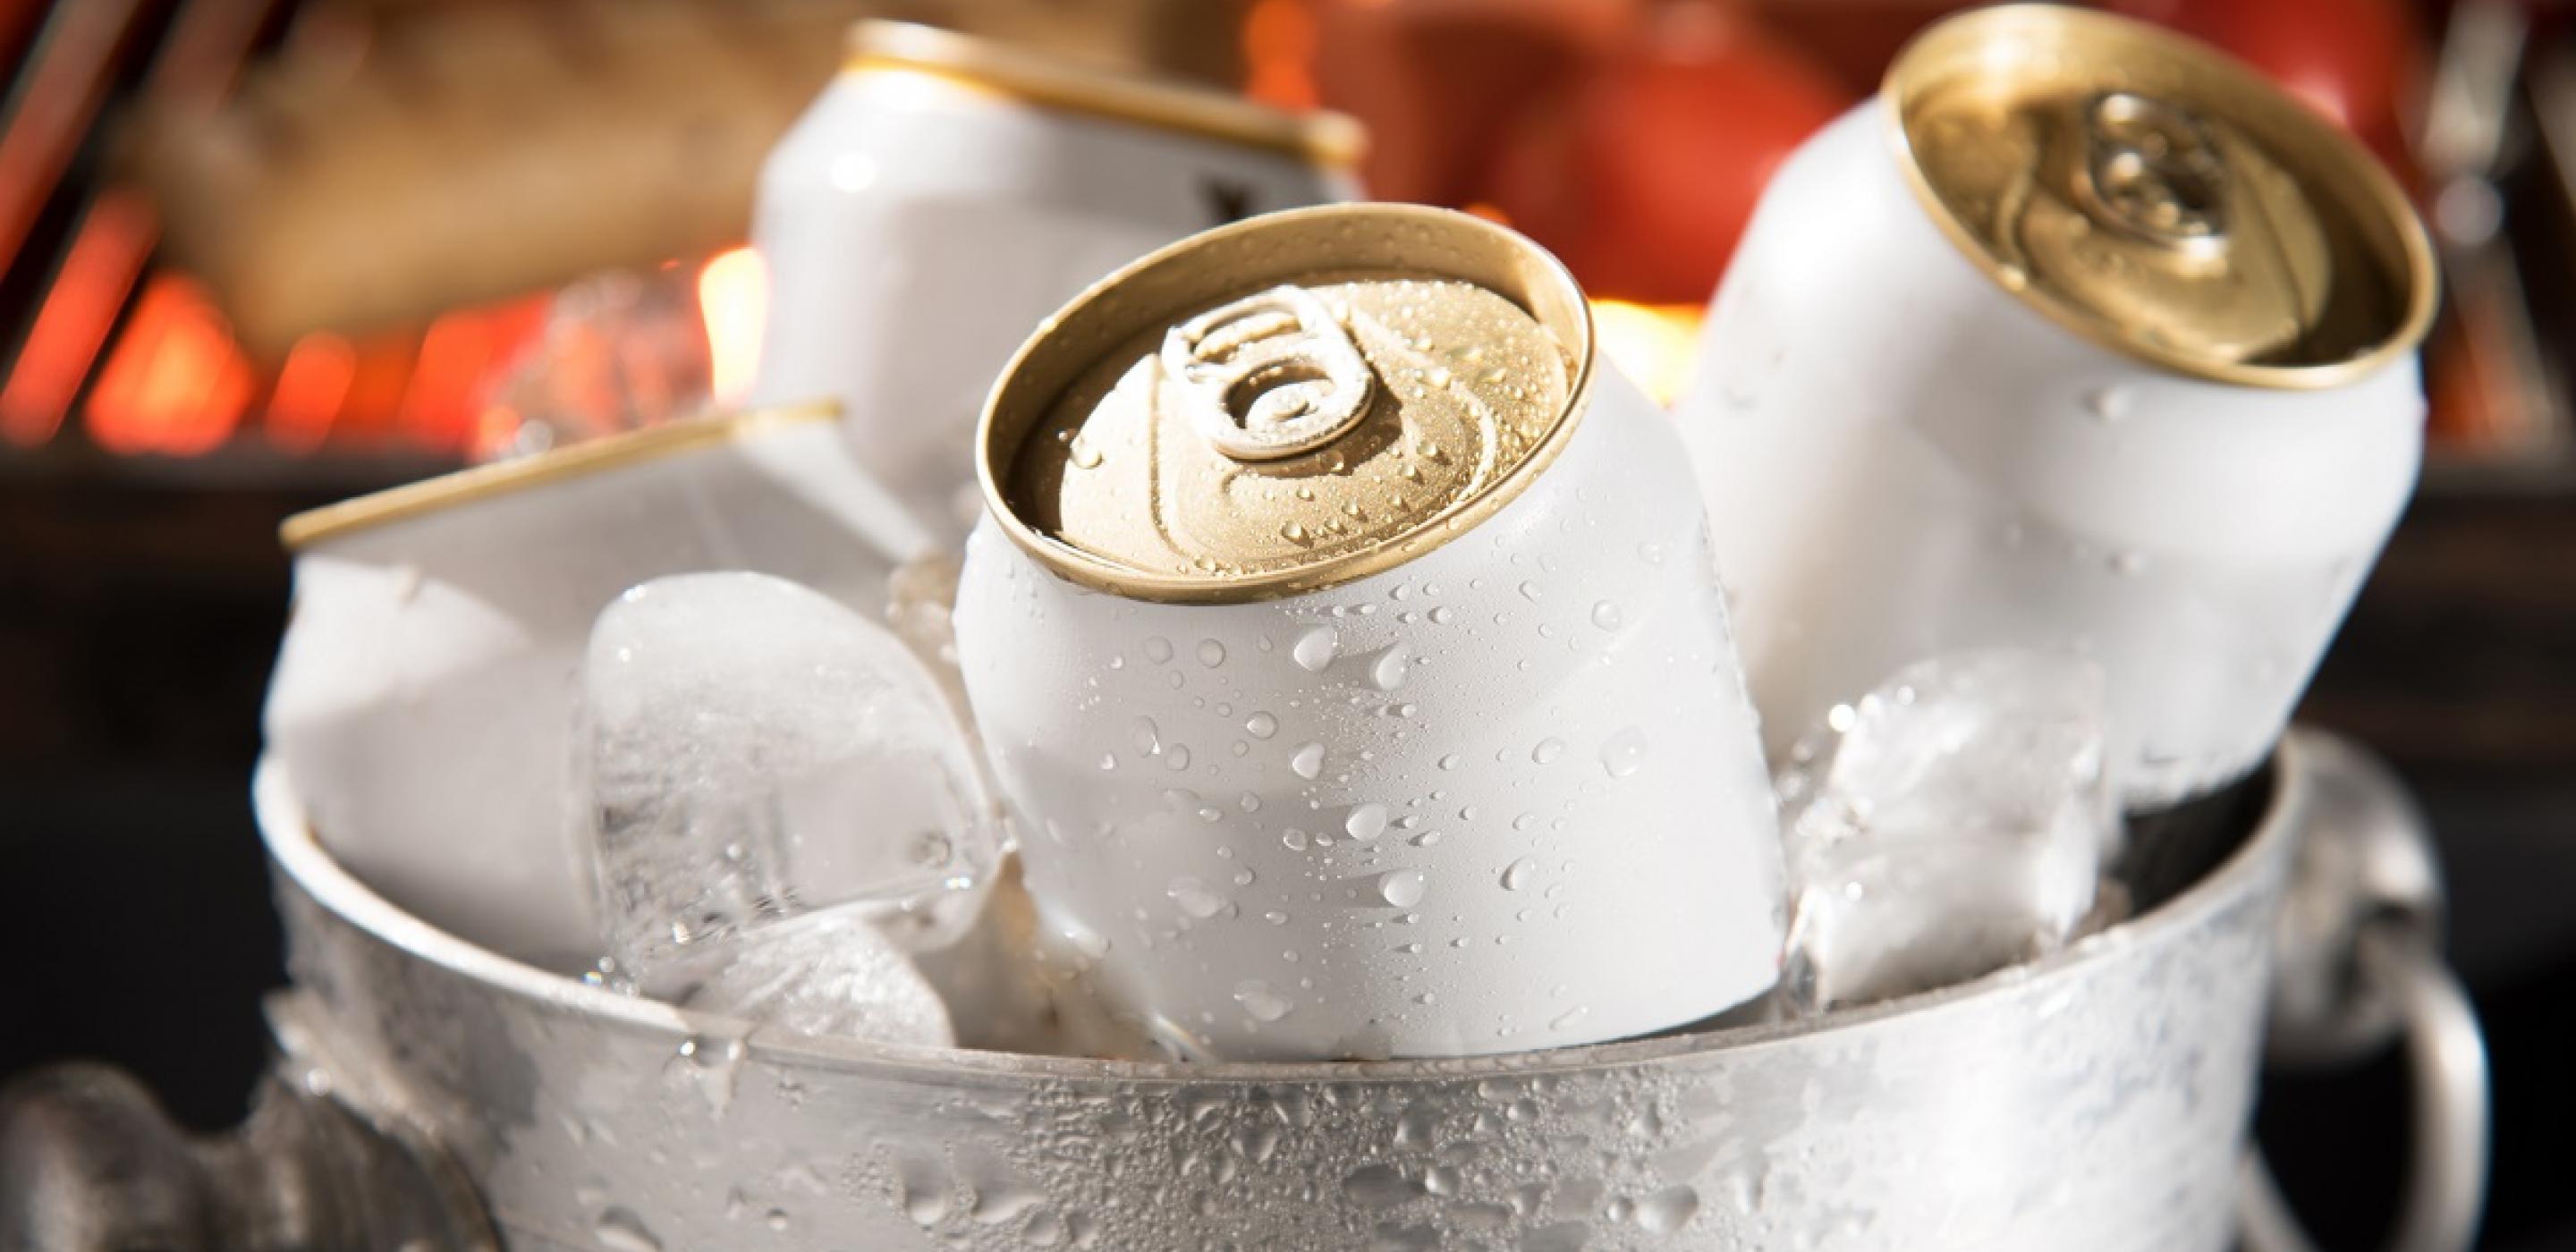 Aluminium cans in ice bucket